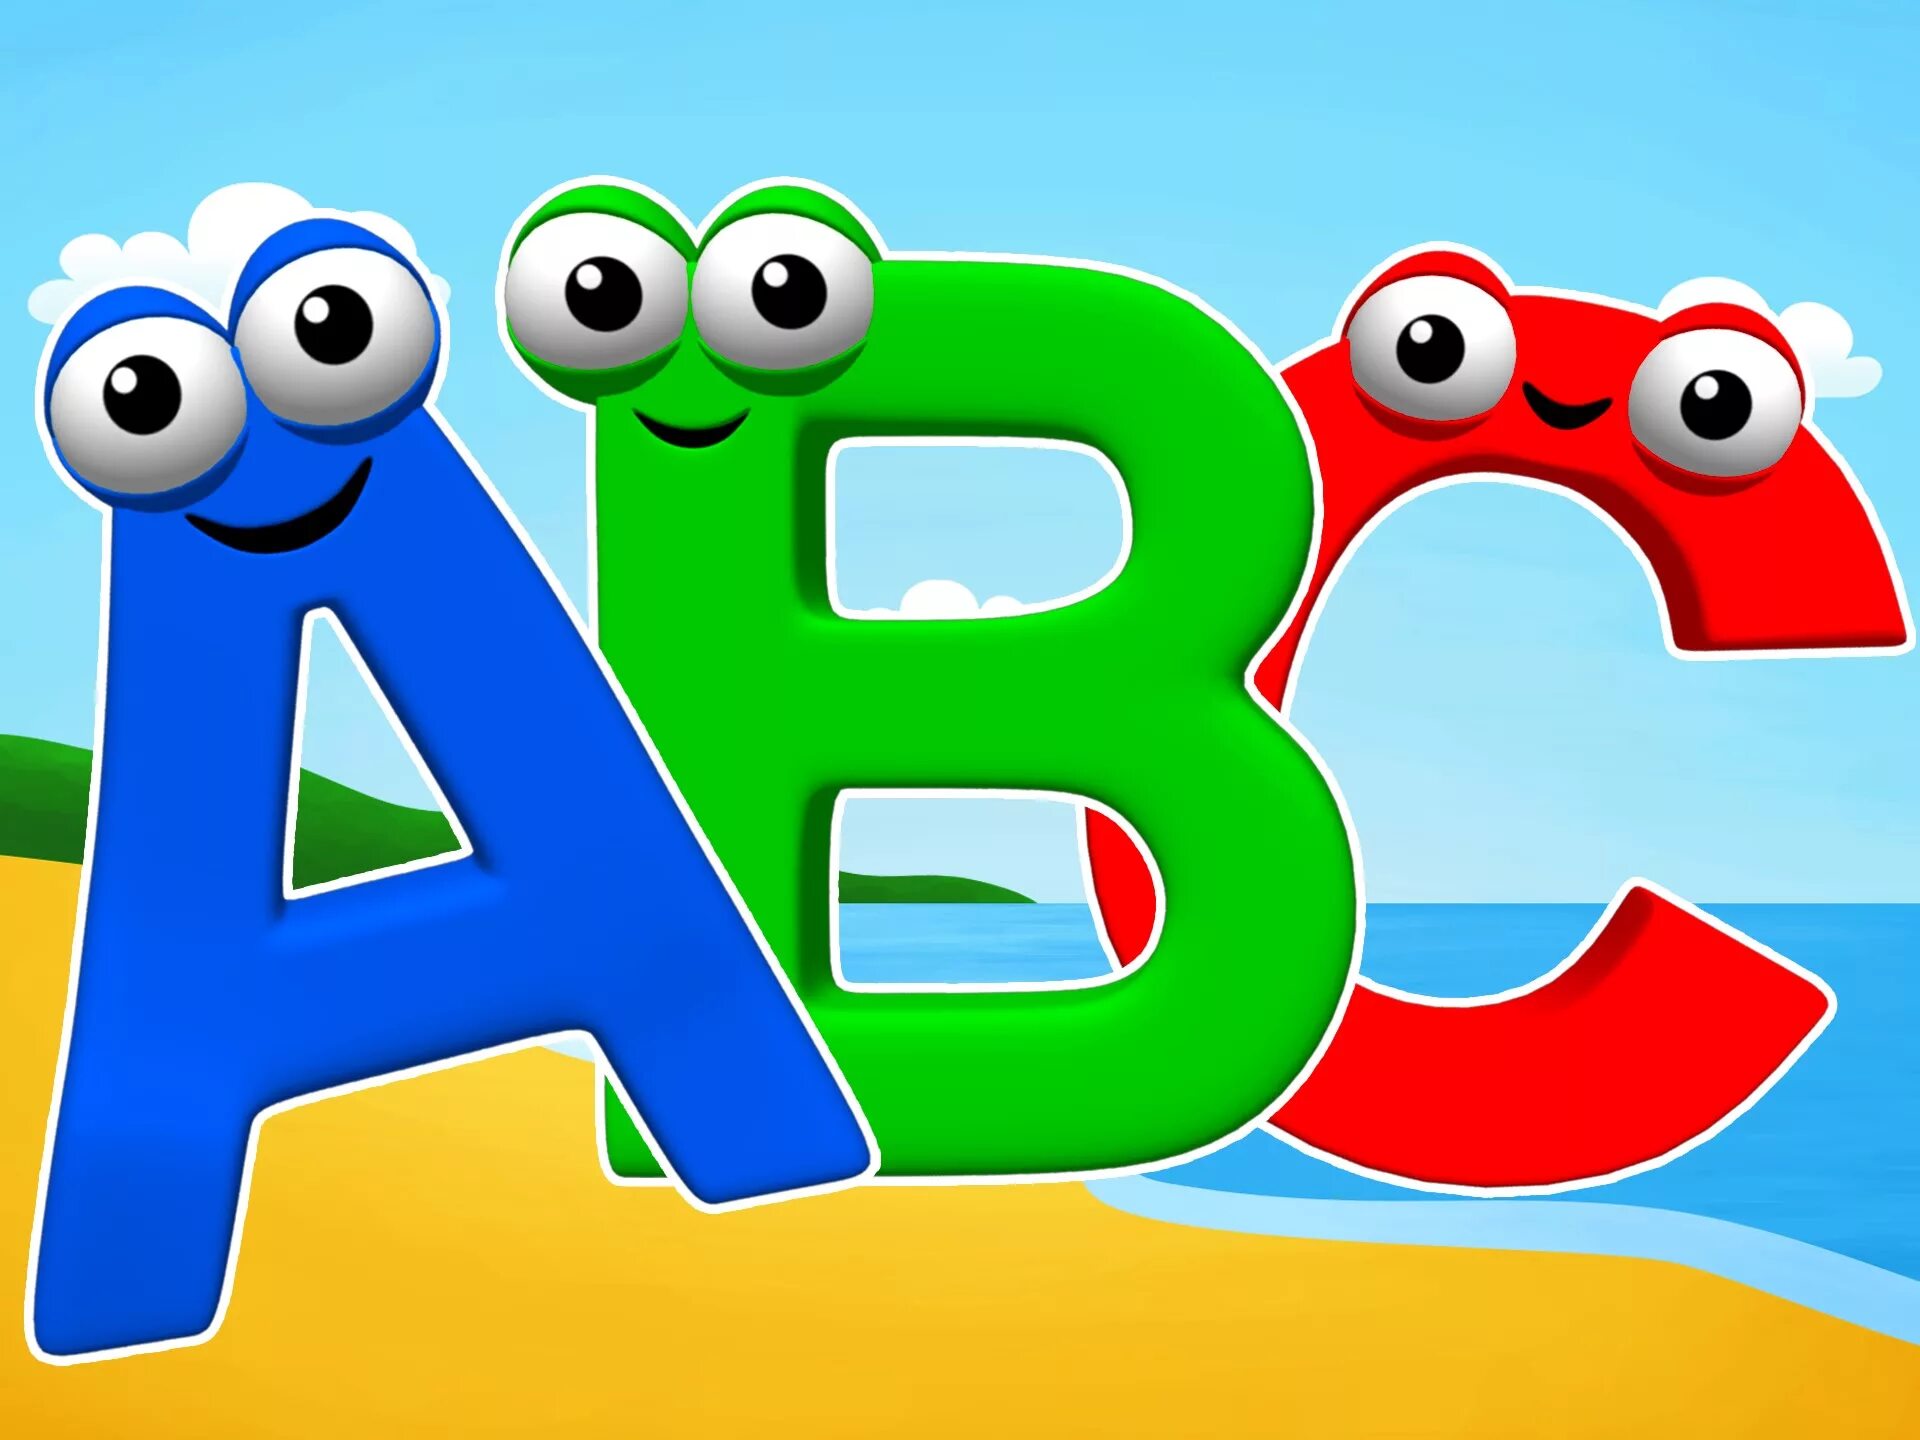 Ролик про английский. ABC. Буквы алфавита для детей. Английские буквы для детей. ABC алфавит.